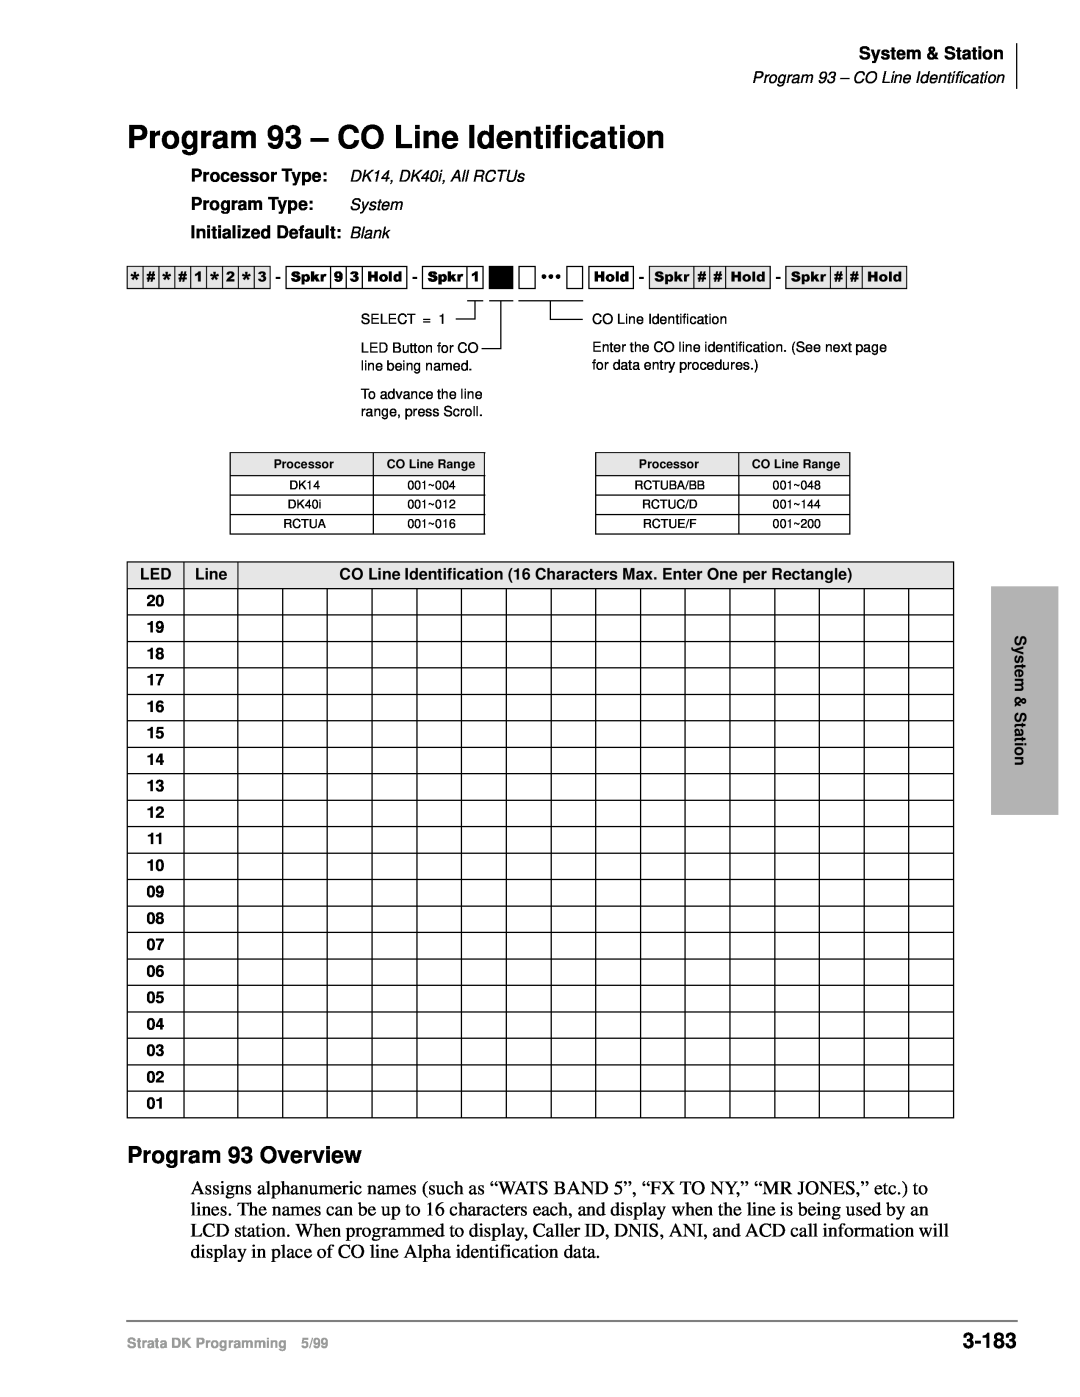 Toshiba dk14 manual Program 93 – CO Line Identification, Program 93 Overview, 3-183 